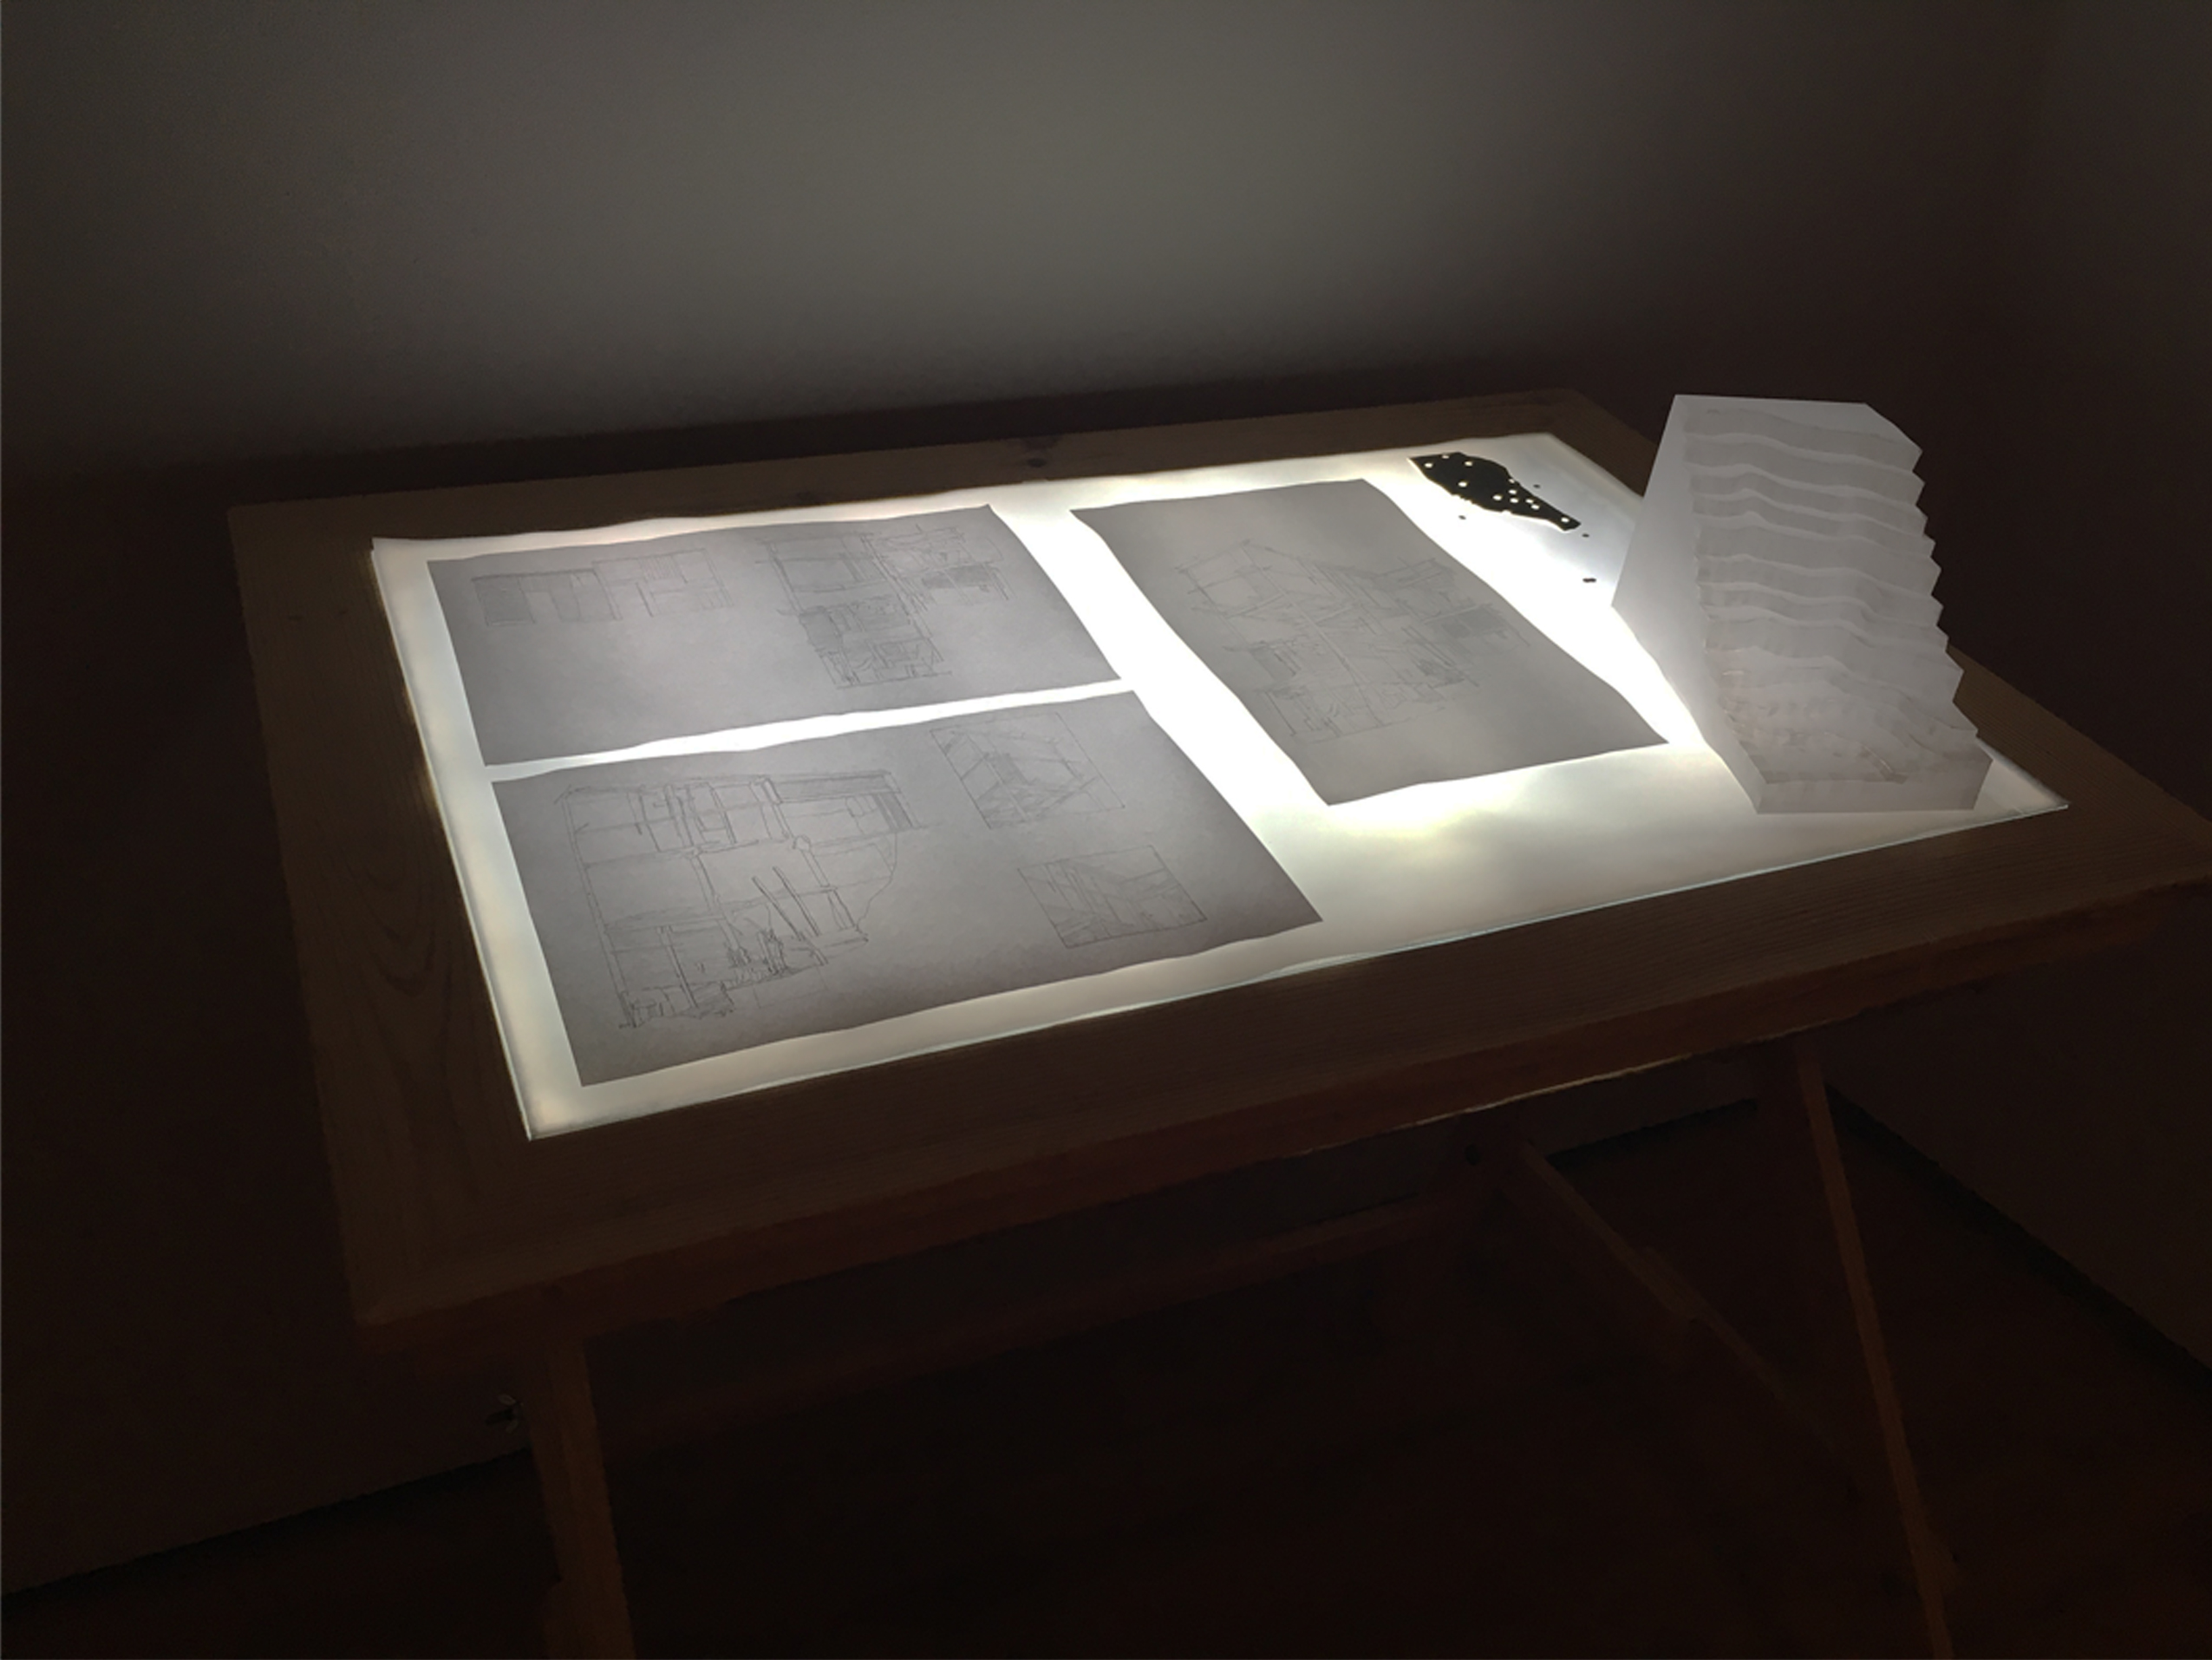 Detalle Arquitecturas leves, 2012. Mesa de luz, impresiones, papel.